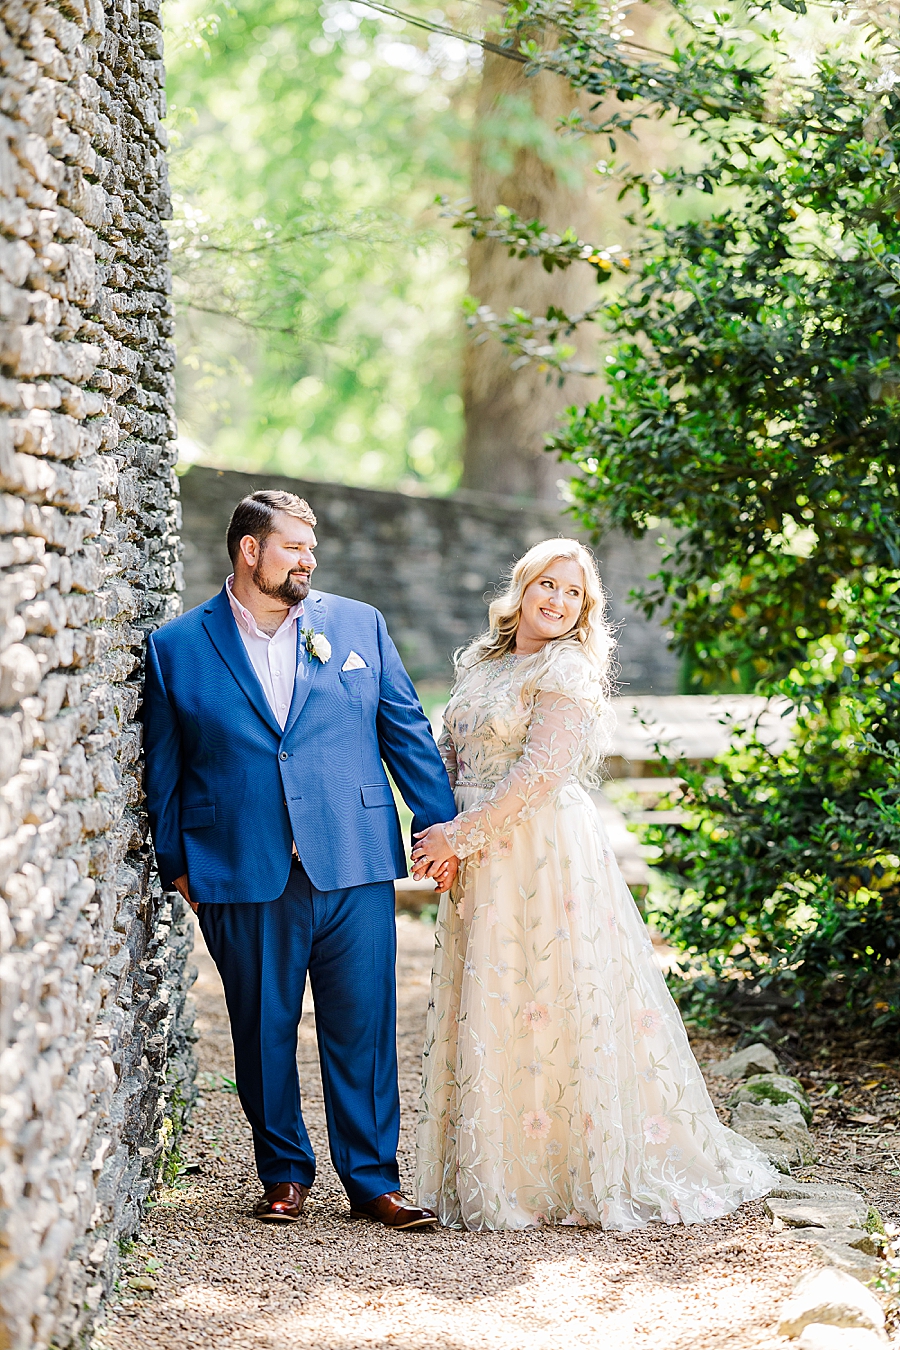 Holding hands at Knoxville Botanical Gardens Wedding by Amanda May Photos